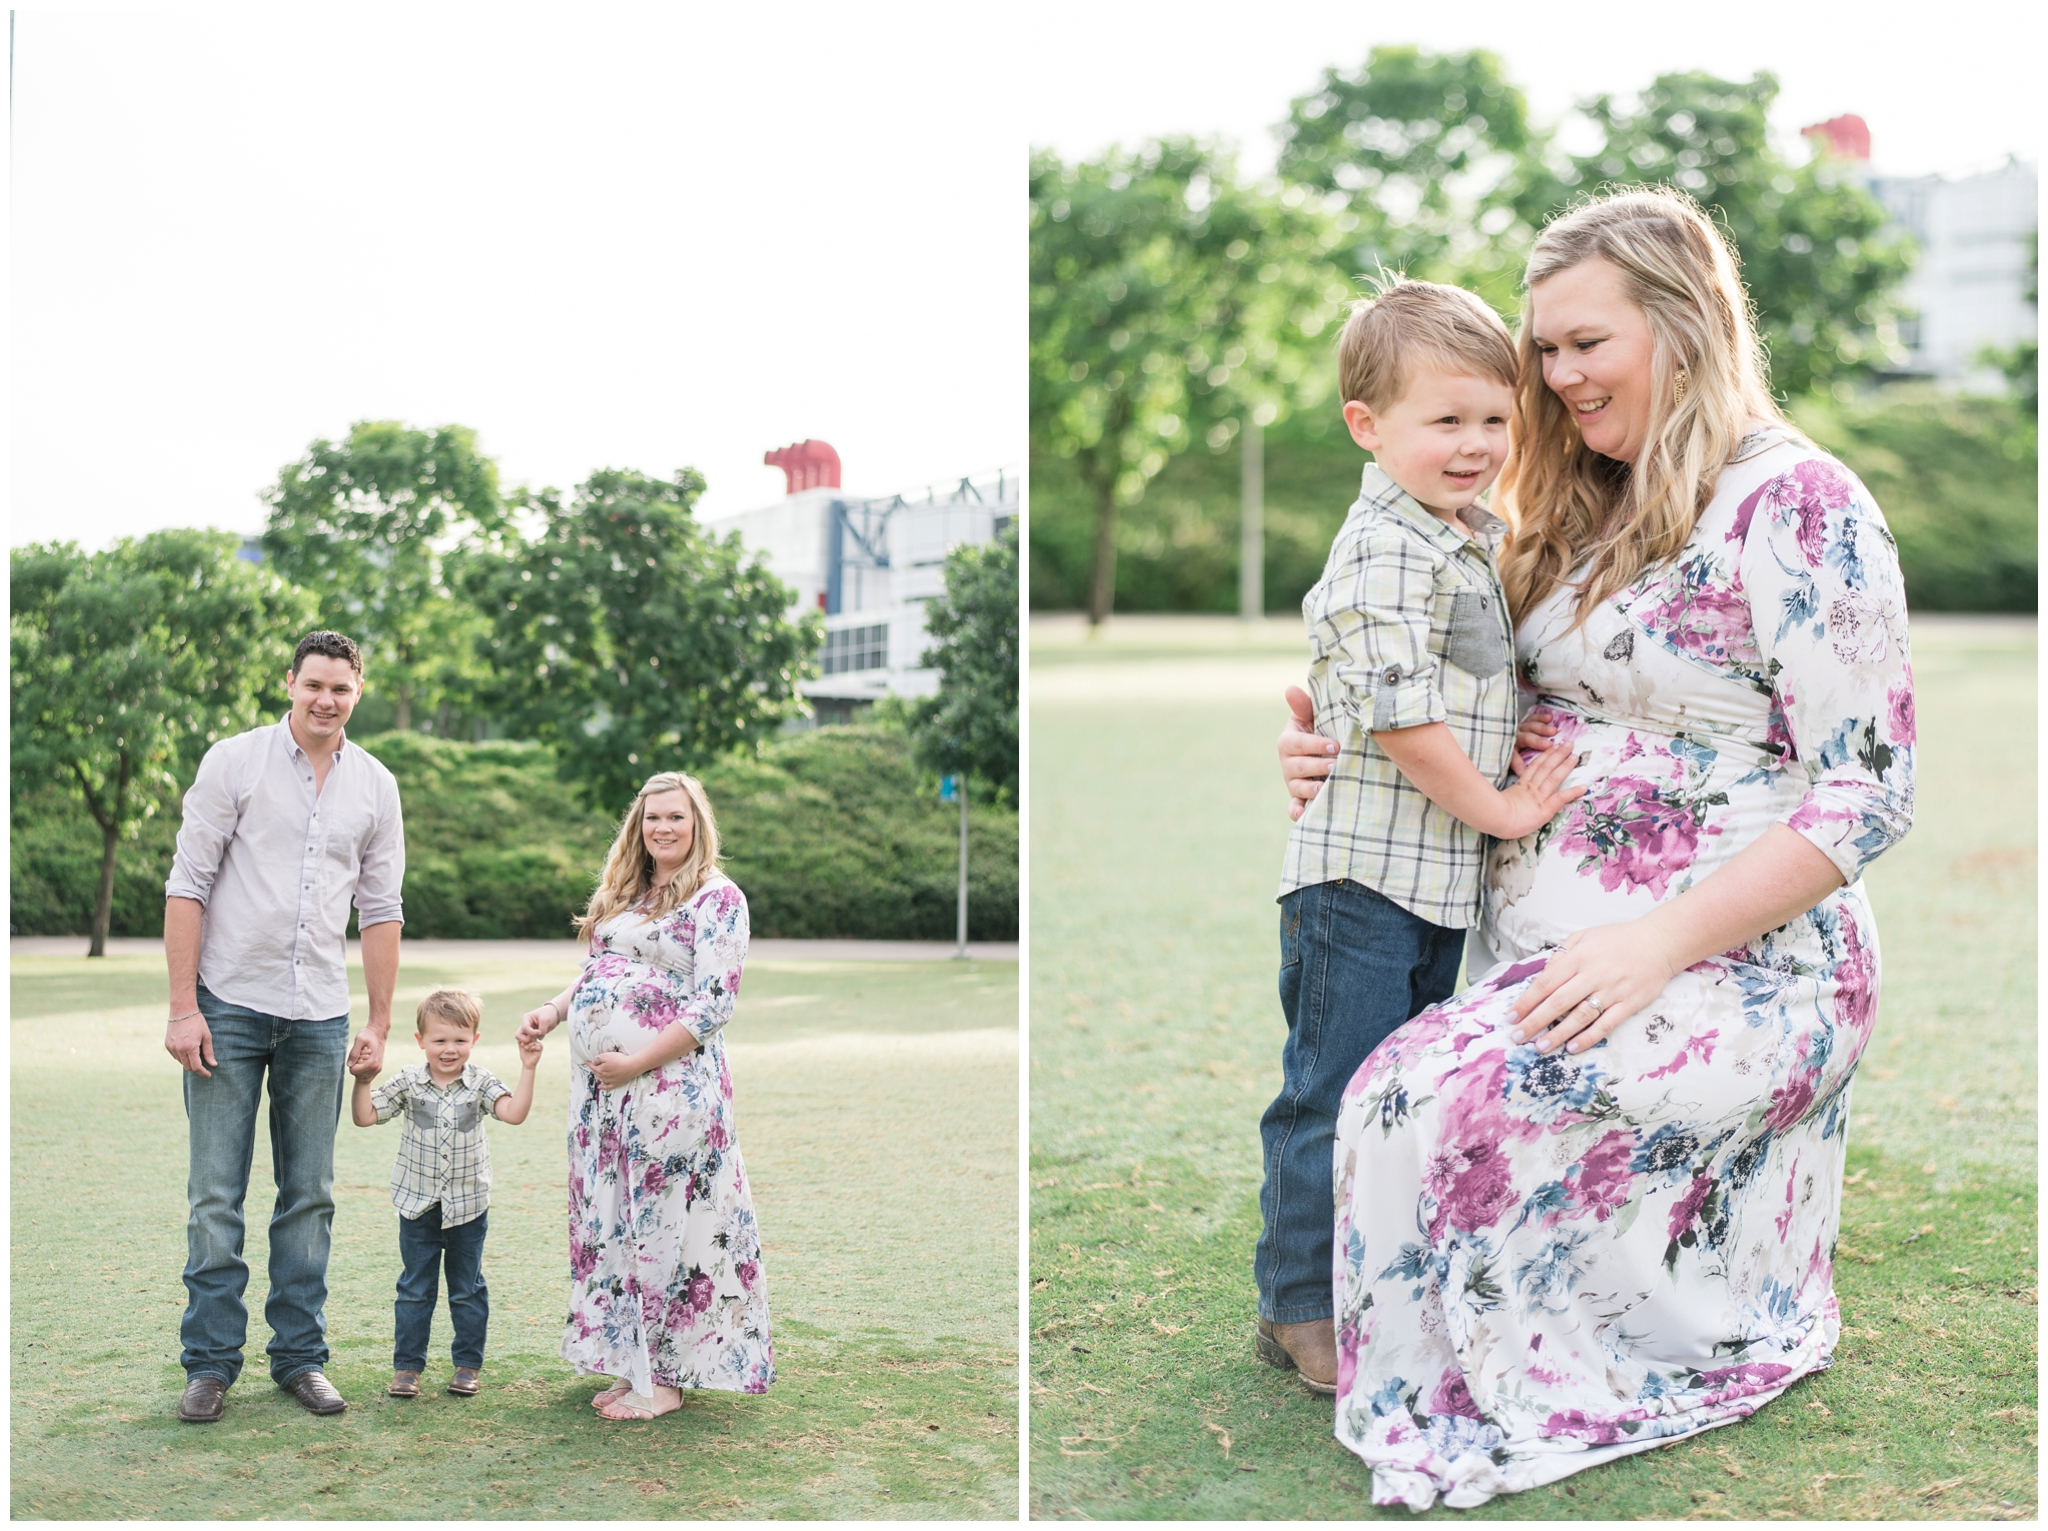 Houston family photographer - early morning maternity portrait session